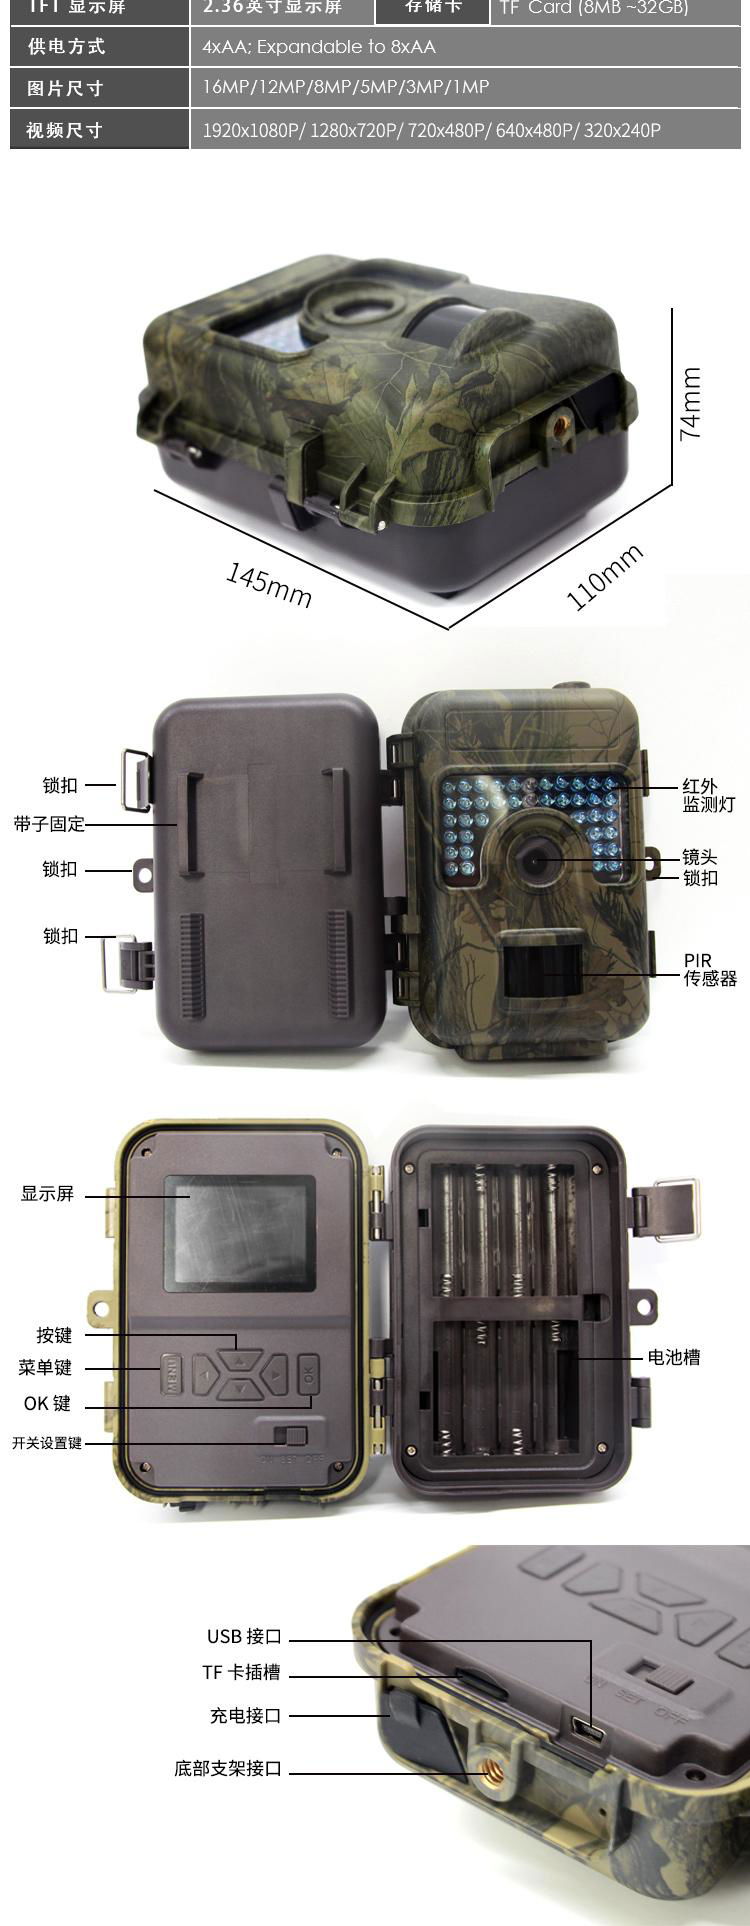 Infrared waterproof hunting camera  3